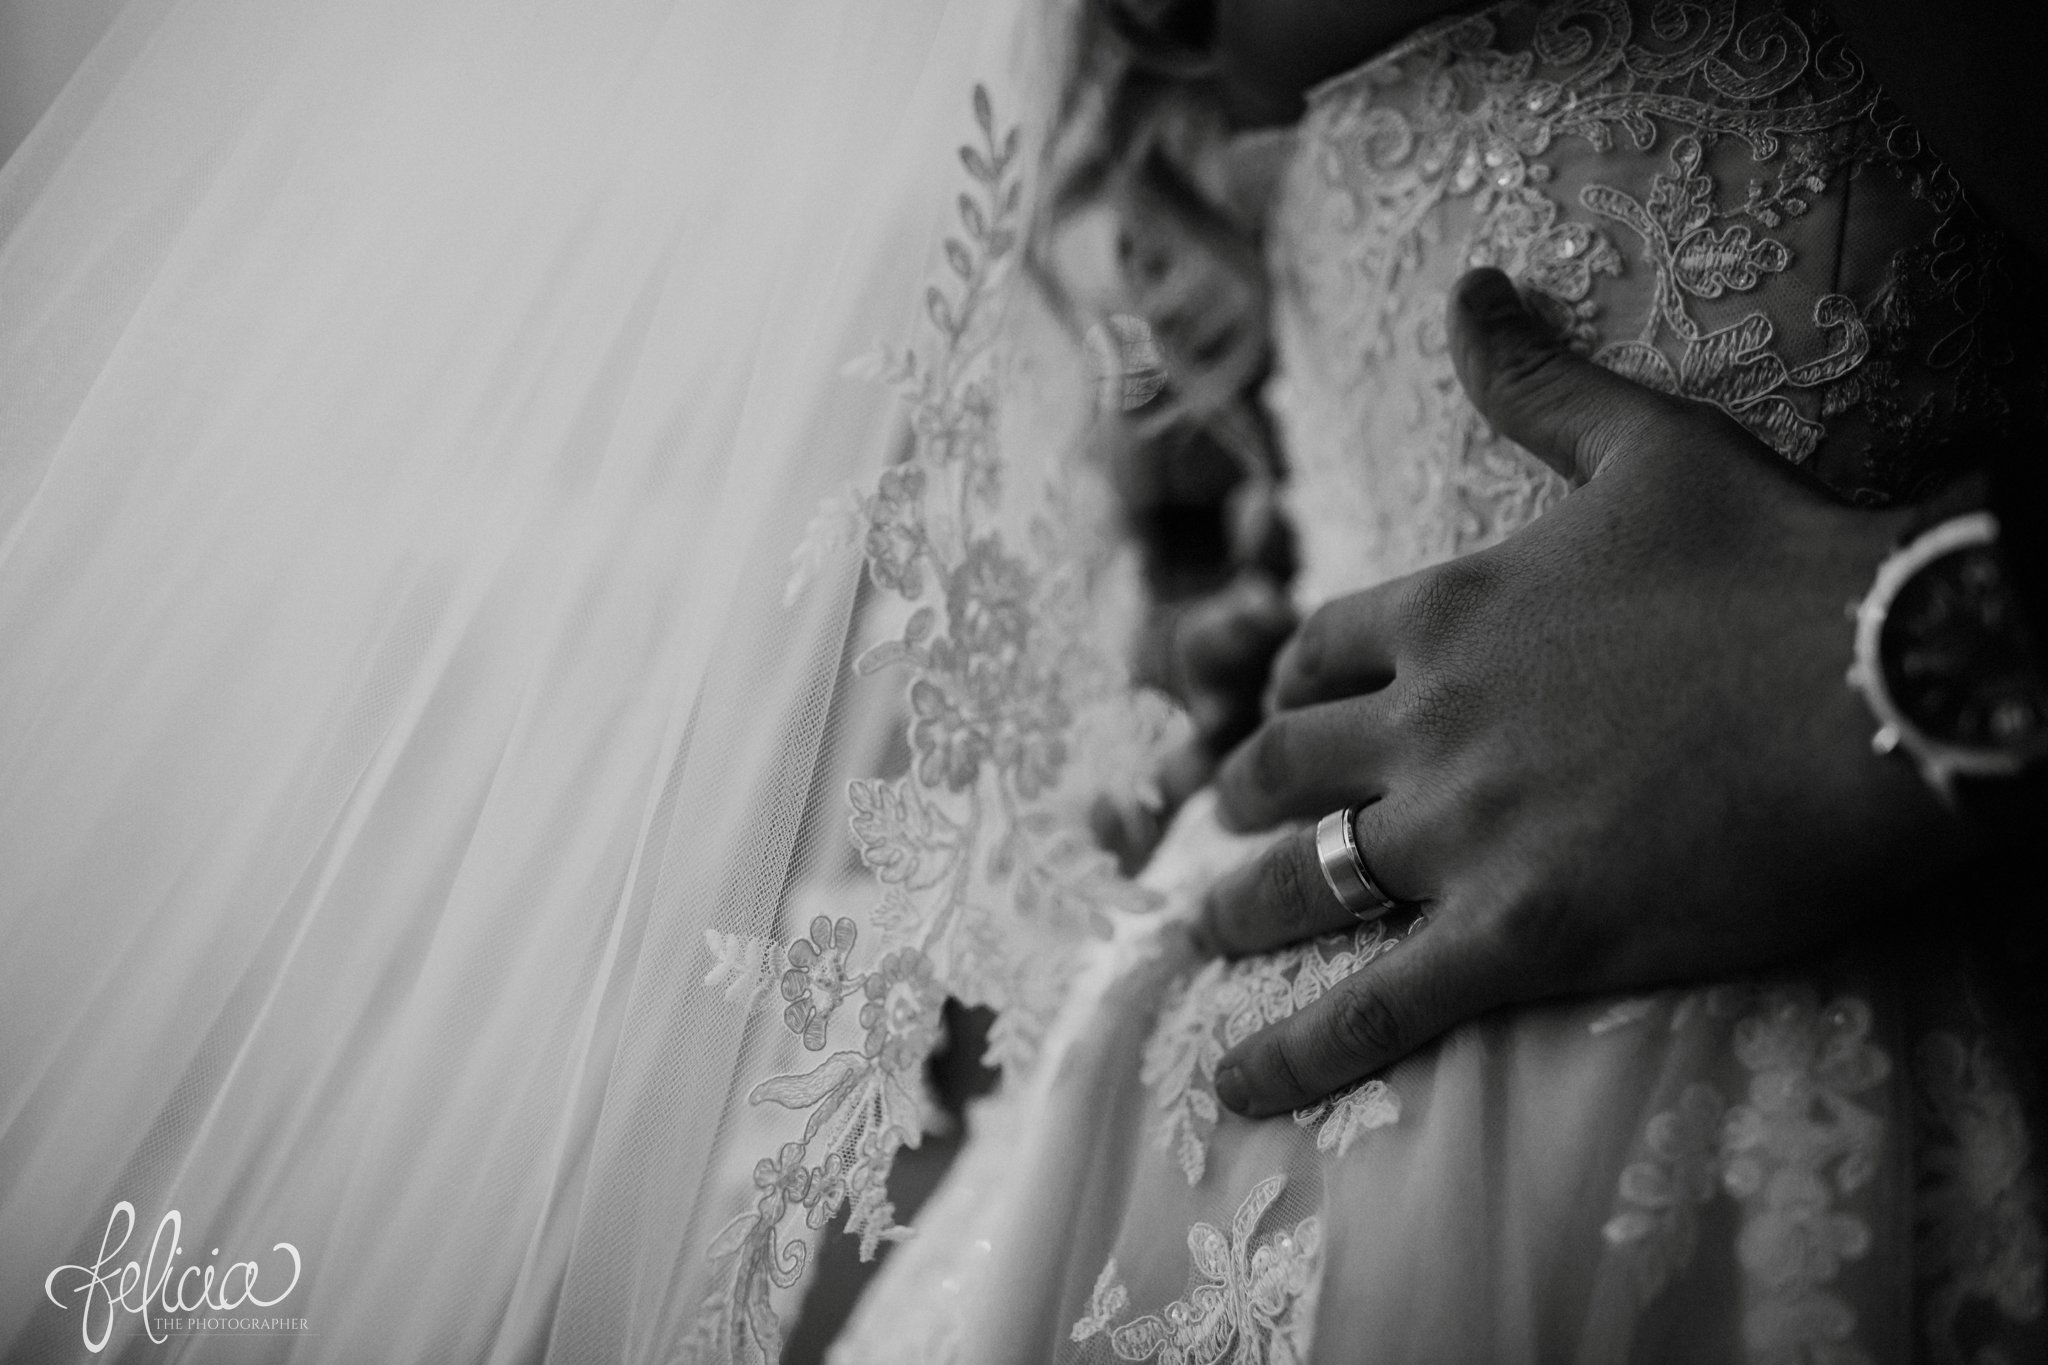 images by feliciathephotographer.com | wedding photographer | downtown kansas city | details | joslin's jewelry | men's band | black and white | lace dress | long veil | contrast | 